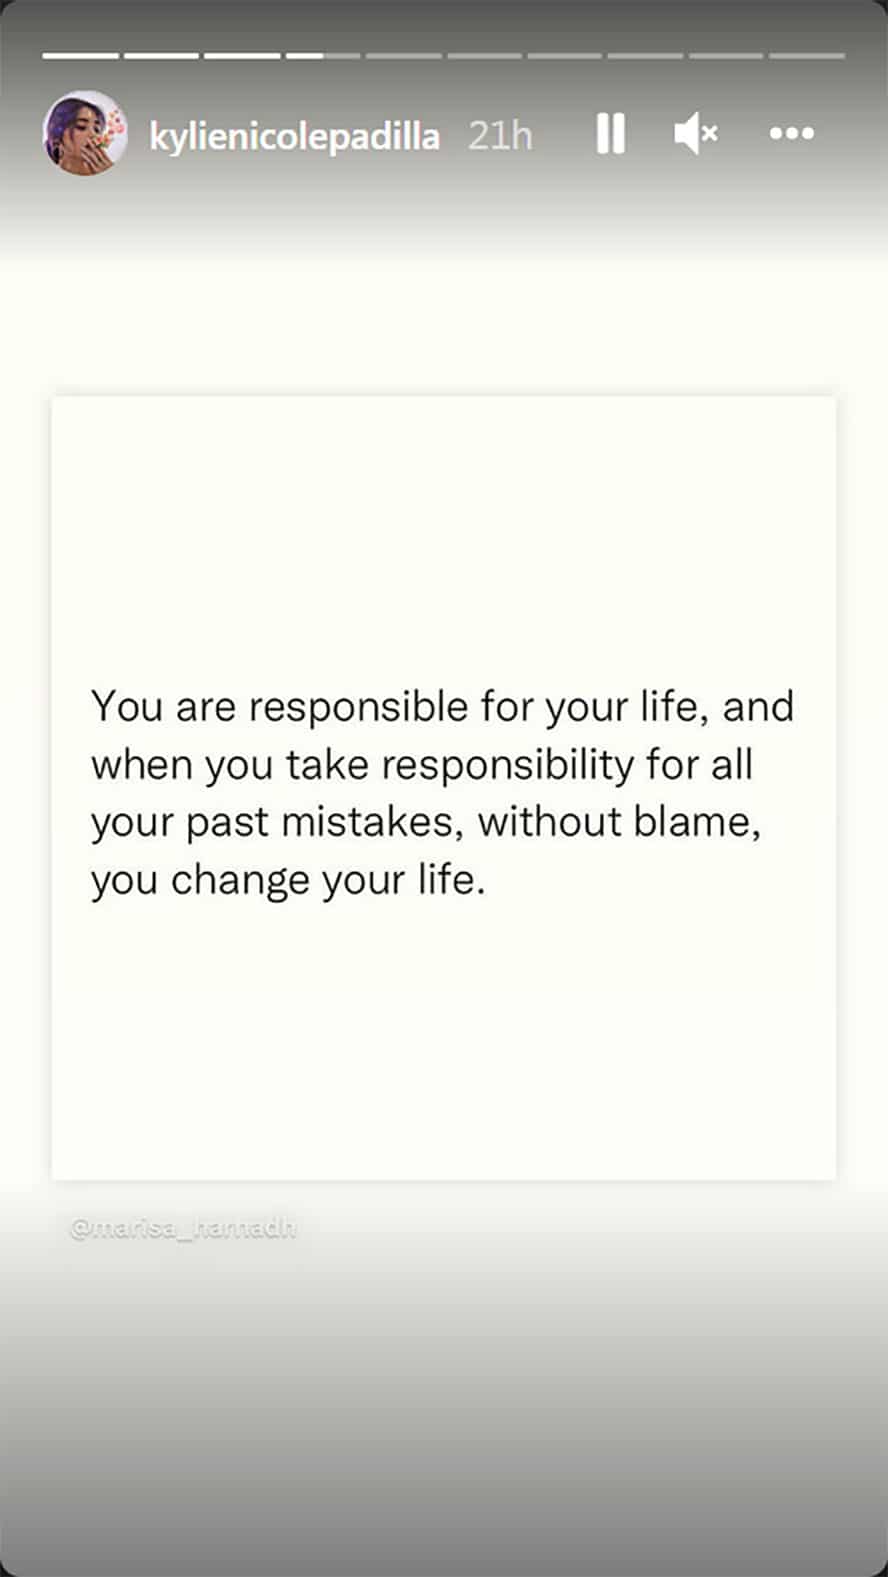 Trending si Kylie Padilla dahil sa post tungkol sa past mistakes: “You are responsible for your life”